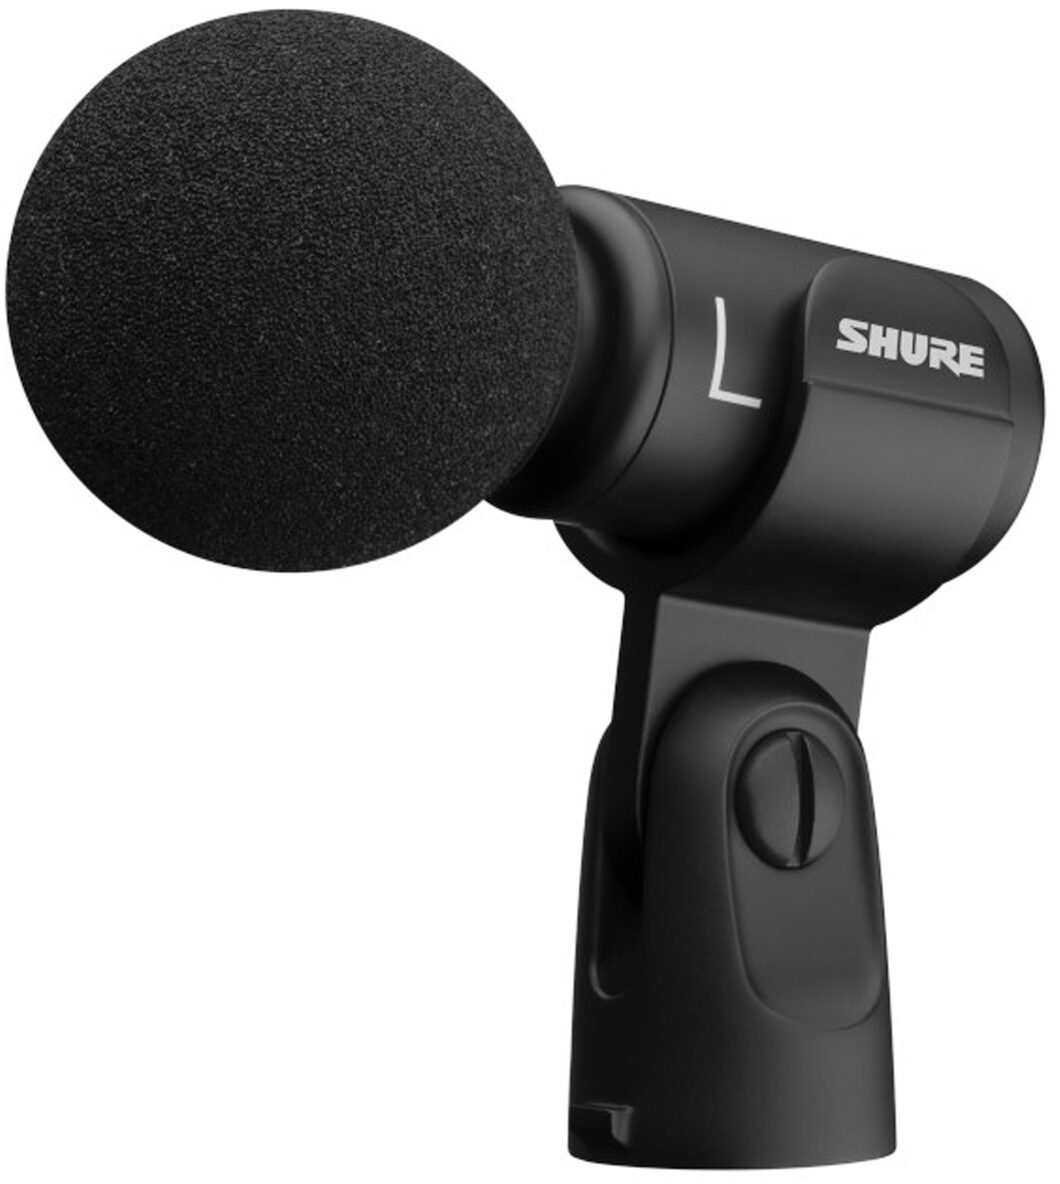 Shure MOTIV MV88 Plus Stereo USB Condenser Microphone | zZounds